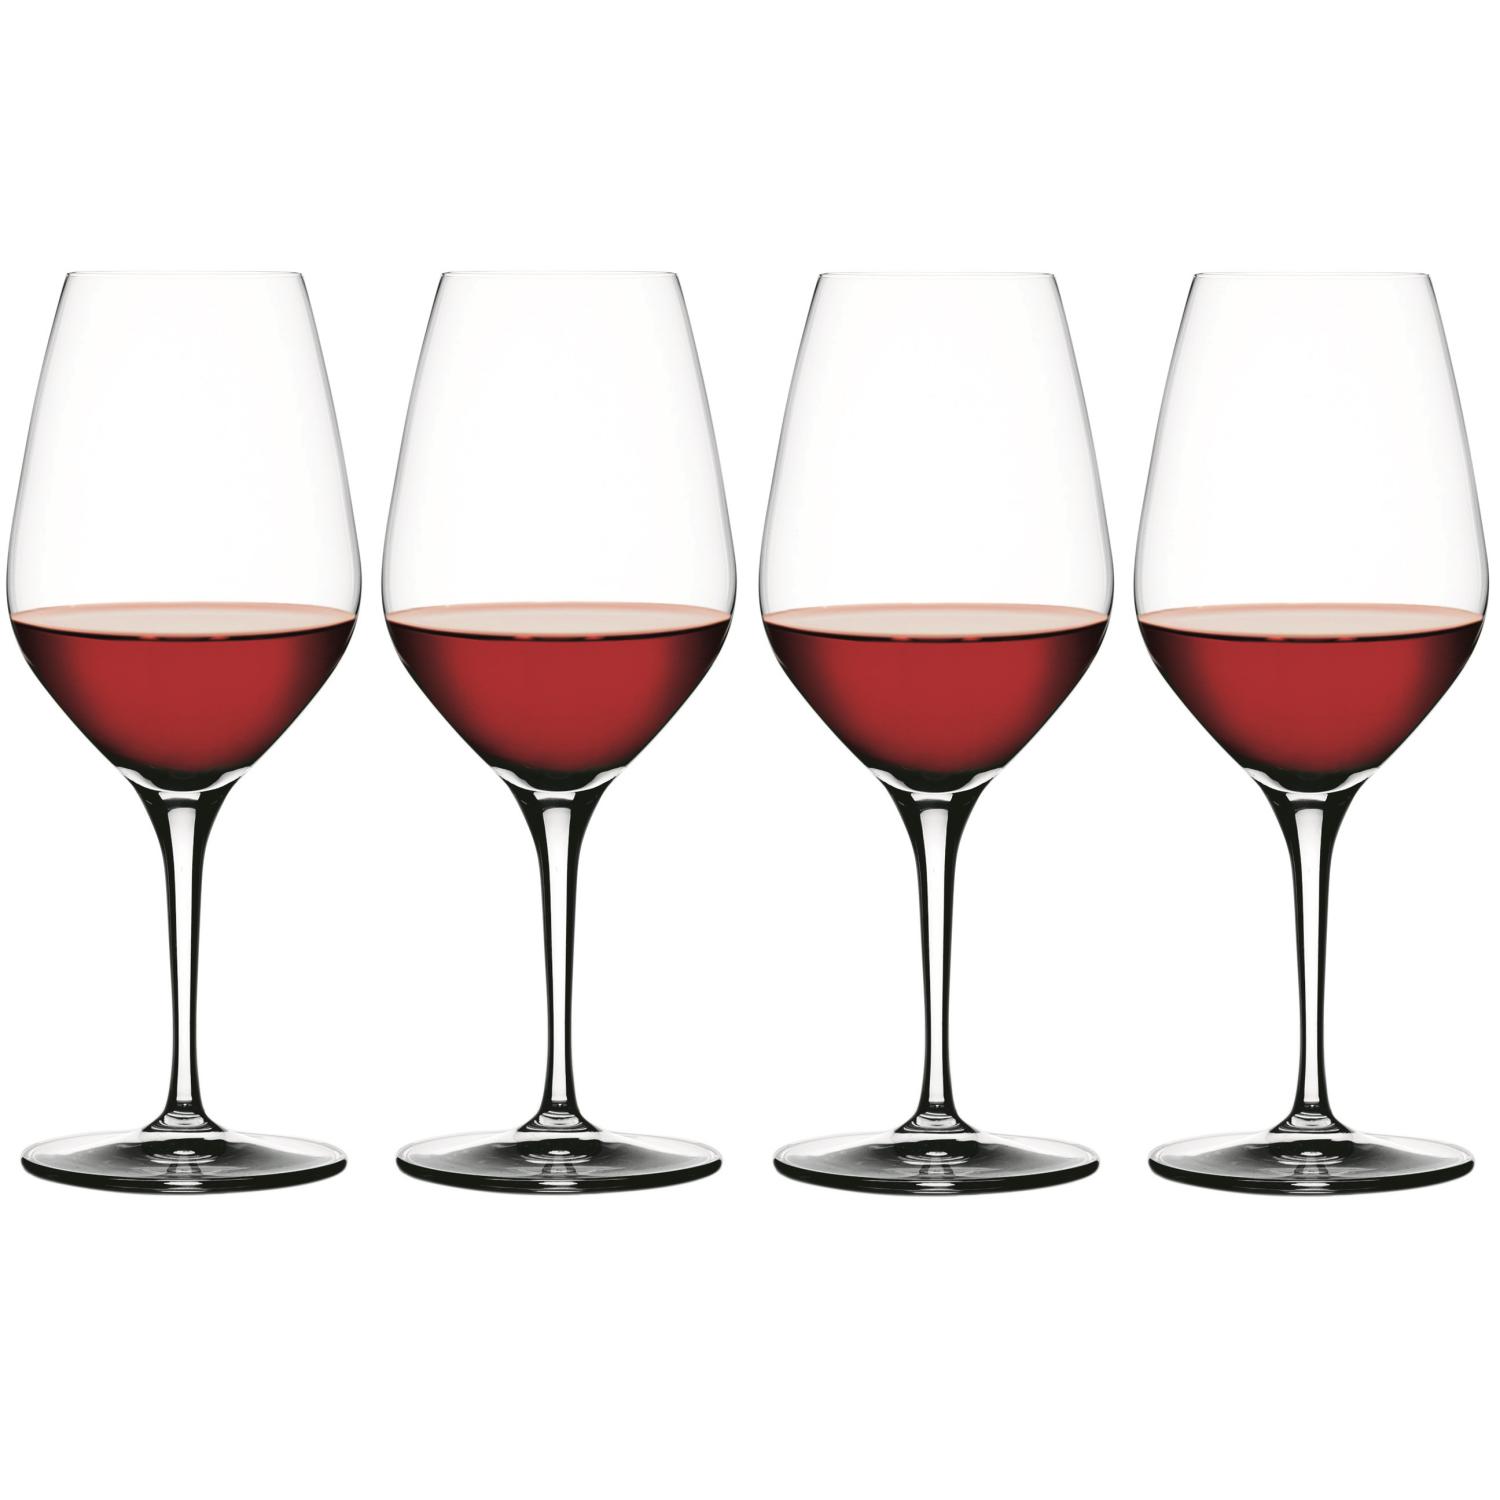 4 бокала для красного вина Spiegelau Authentis Red Wine 480 мл (арт. 4400181)